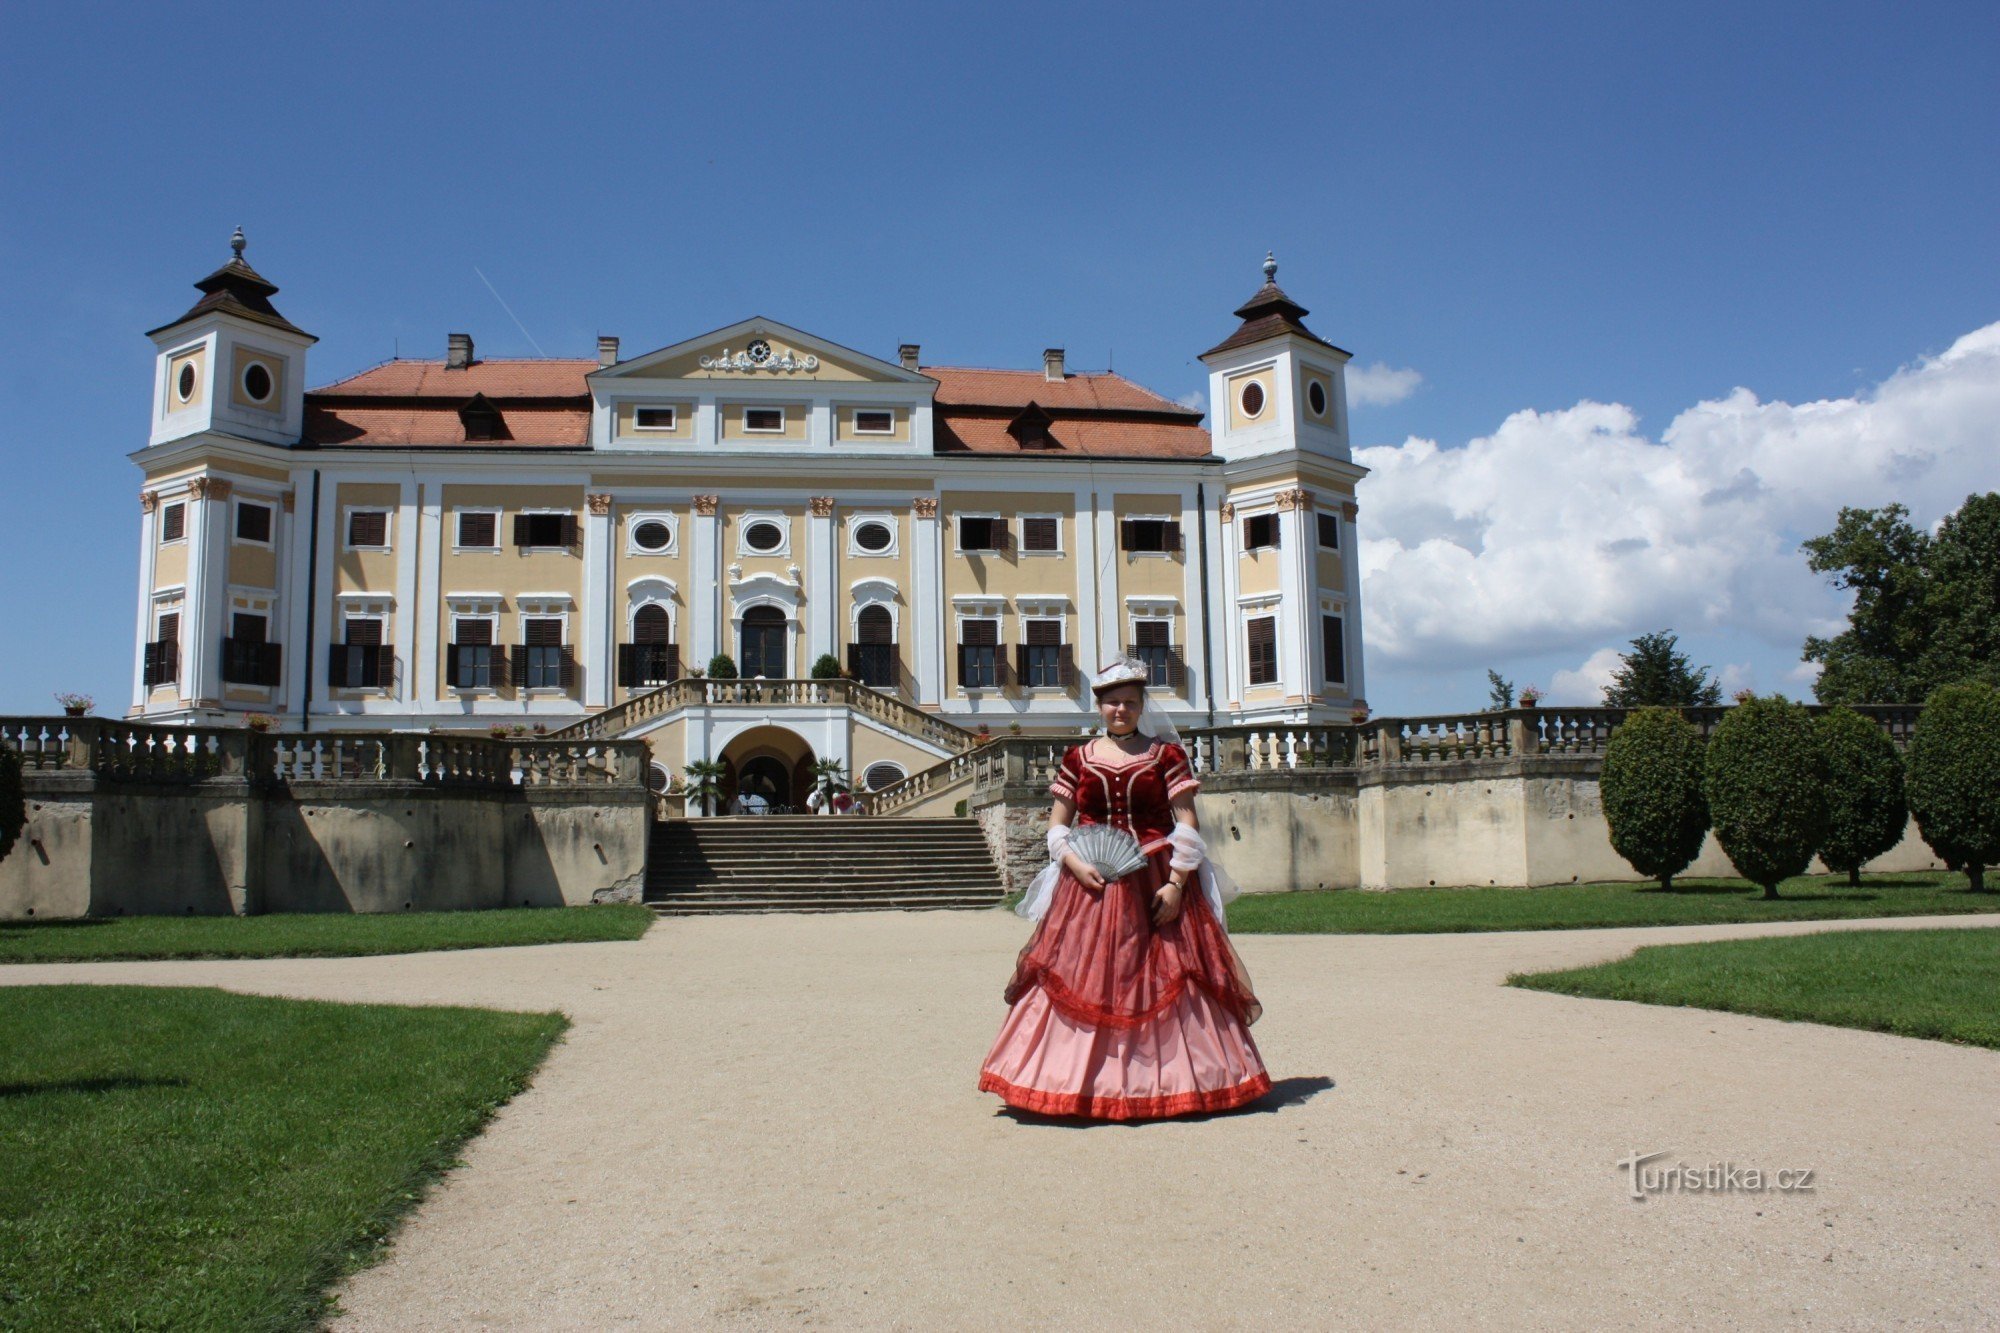 Parque francês romântico do castelo de Milotice perto de Kyjova